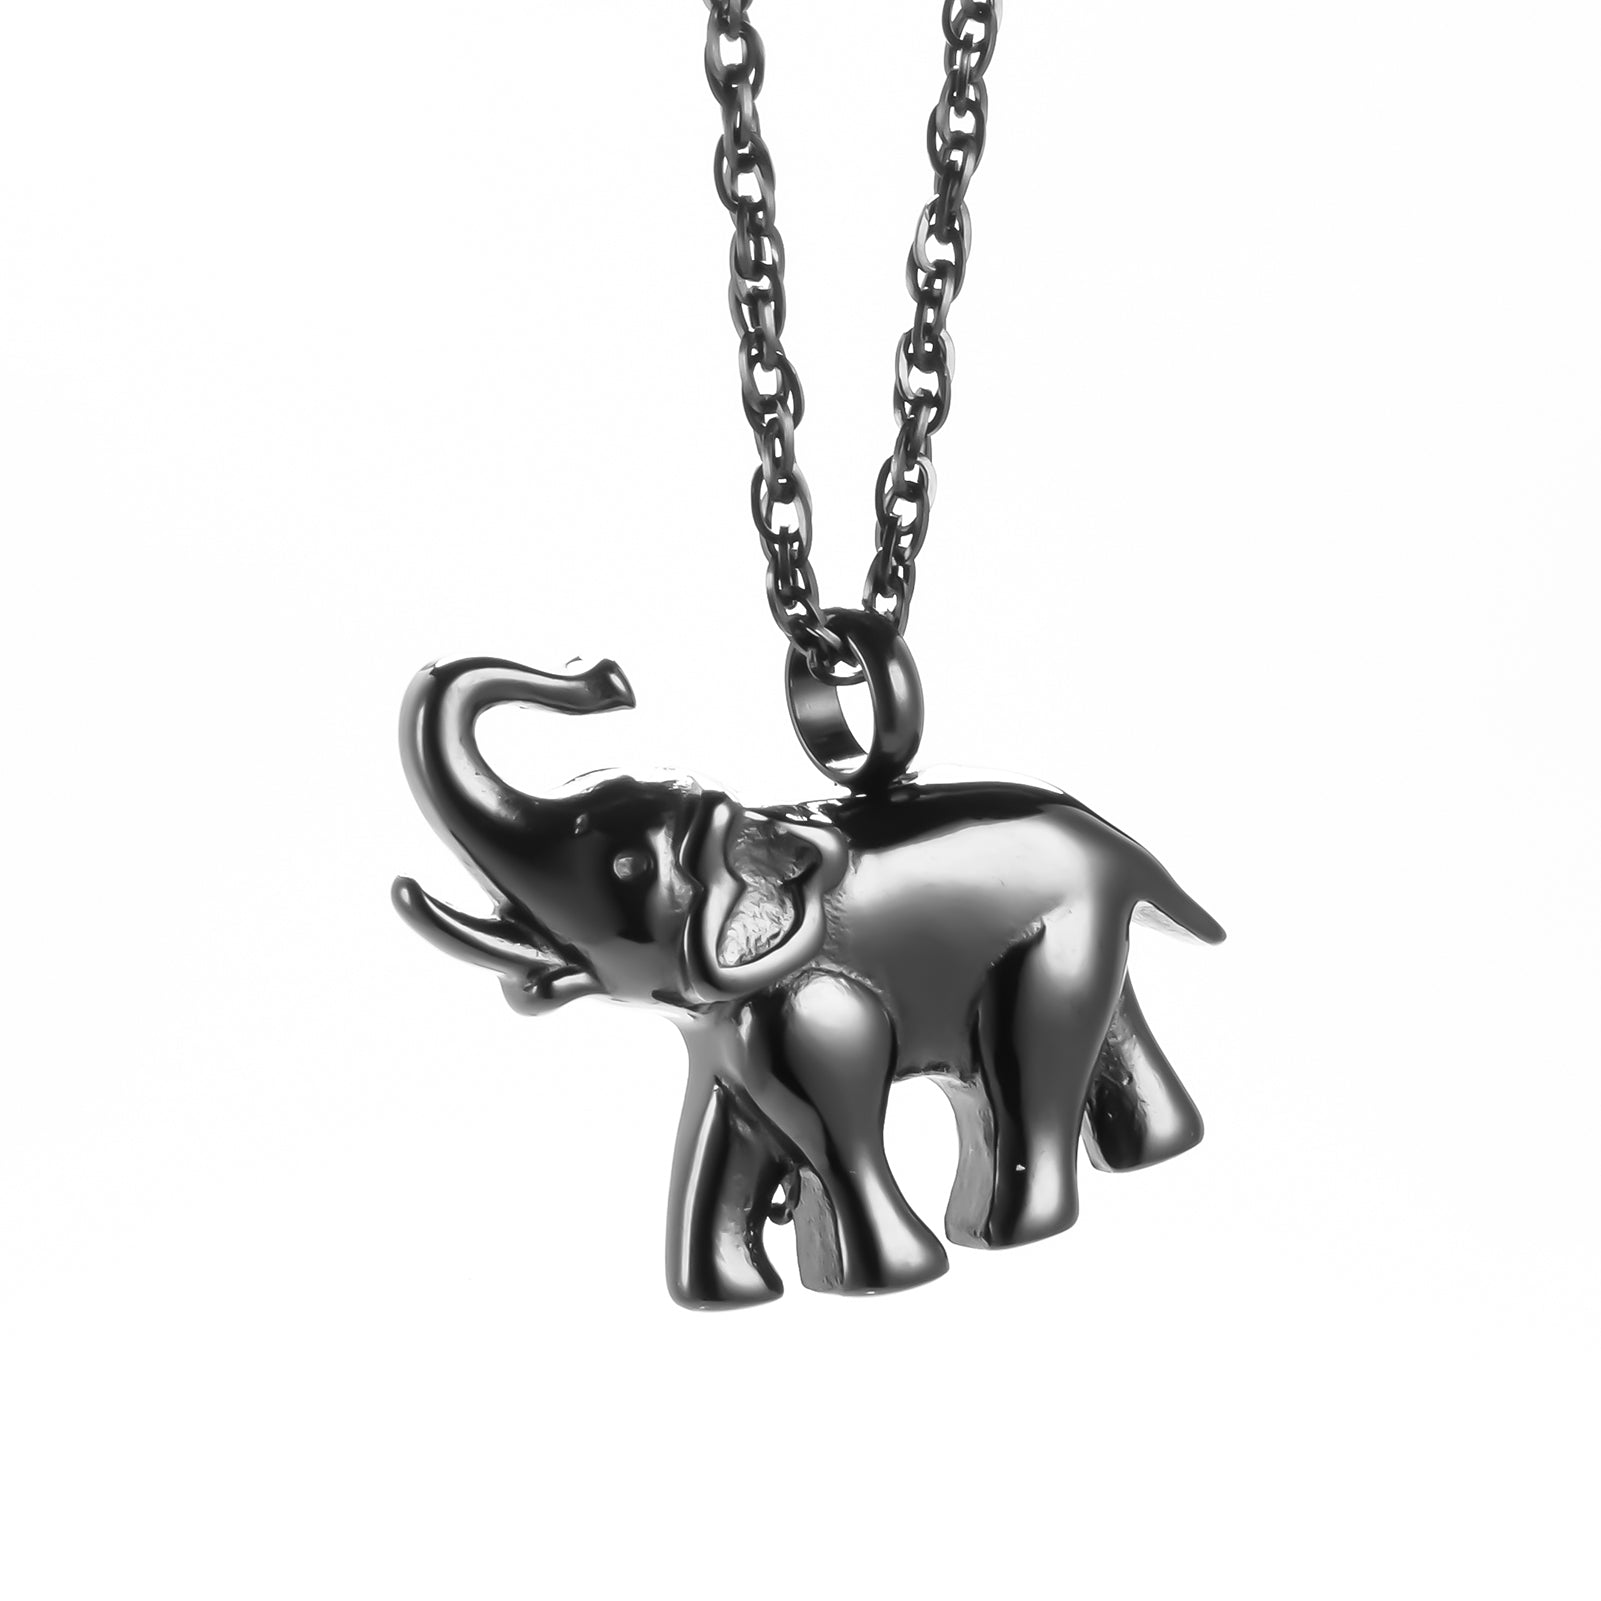 The Elephant Cremation Jewelry